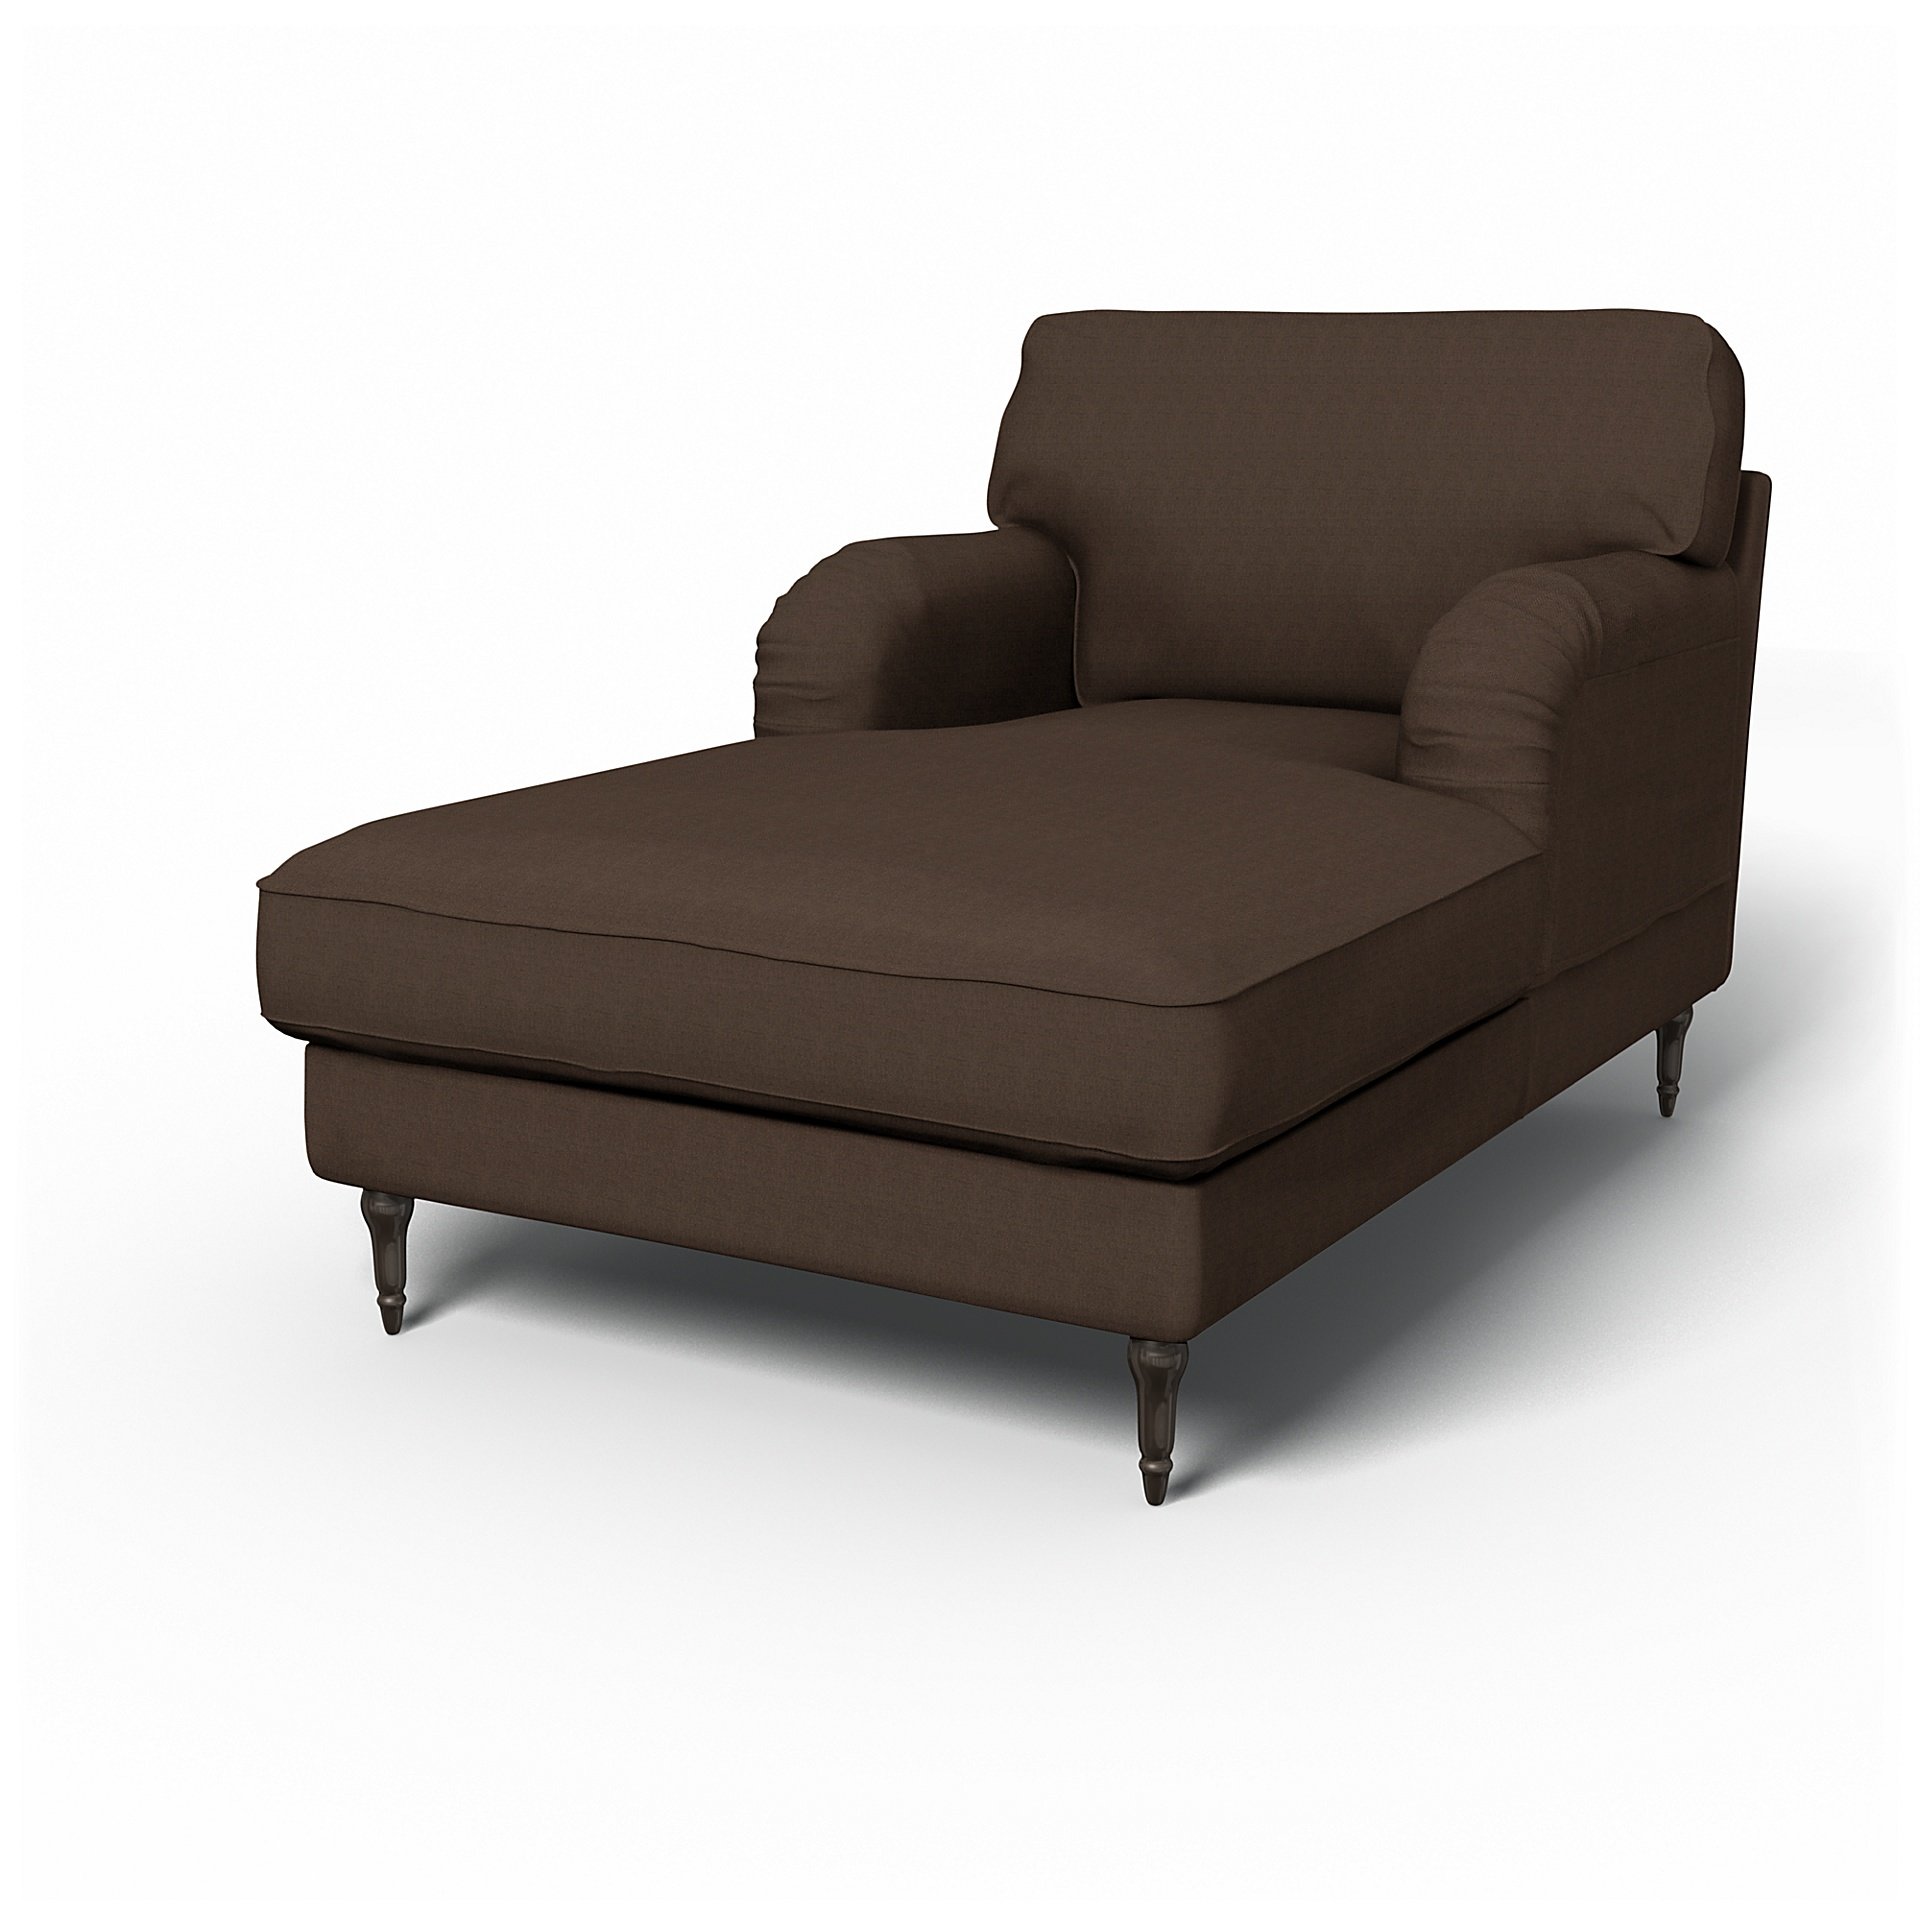 IKEA - Stocksund Chaise Longue Cover, Chocolate, Boucle & Texture - Bemz